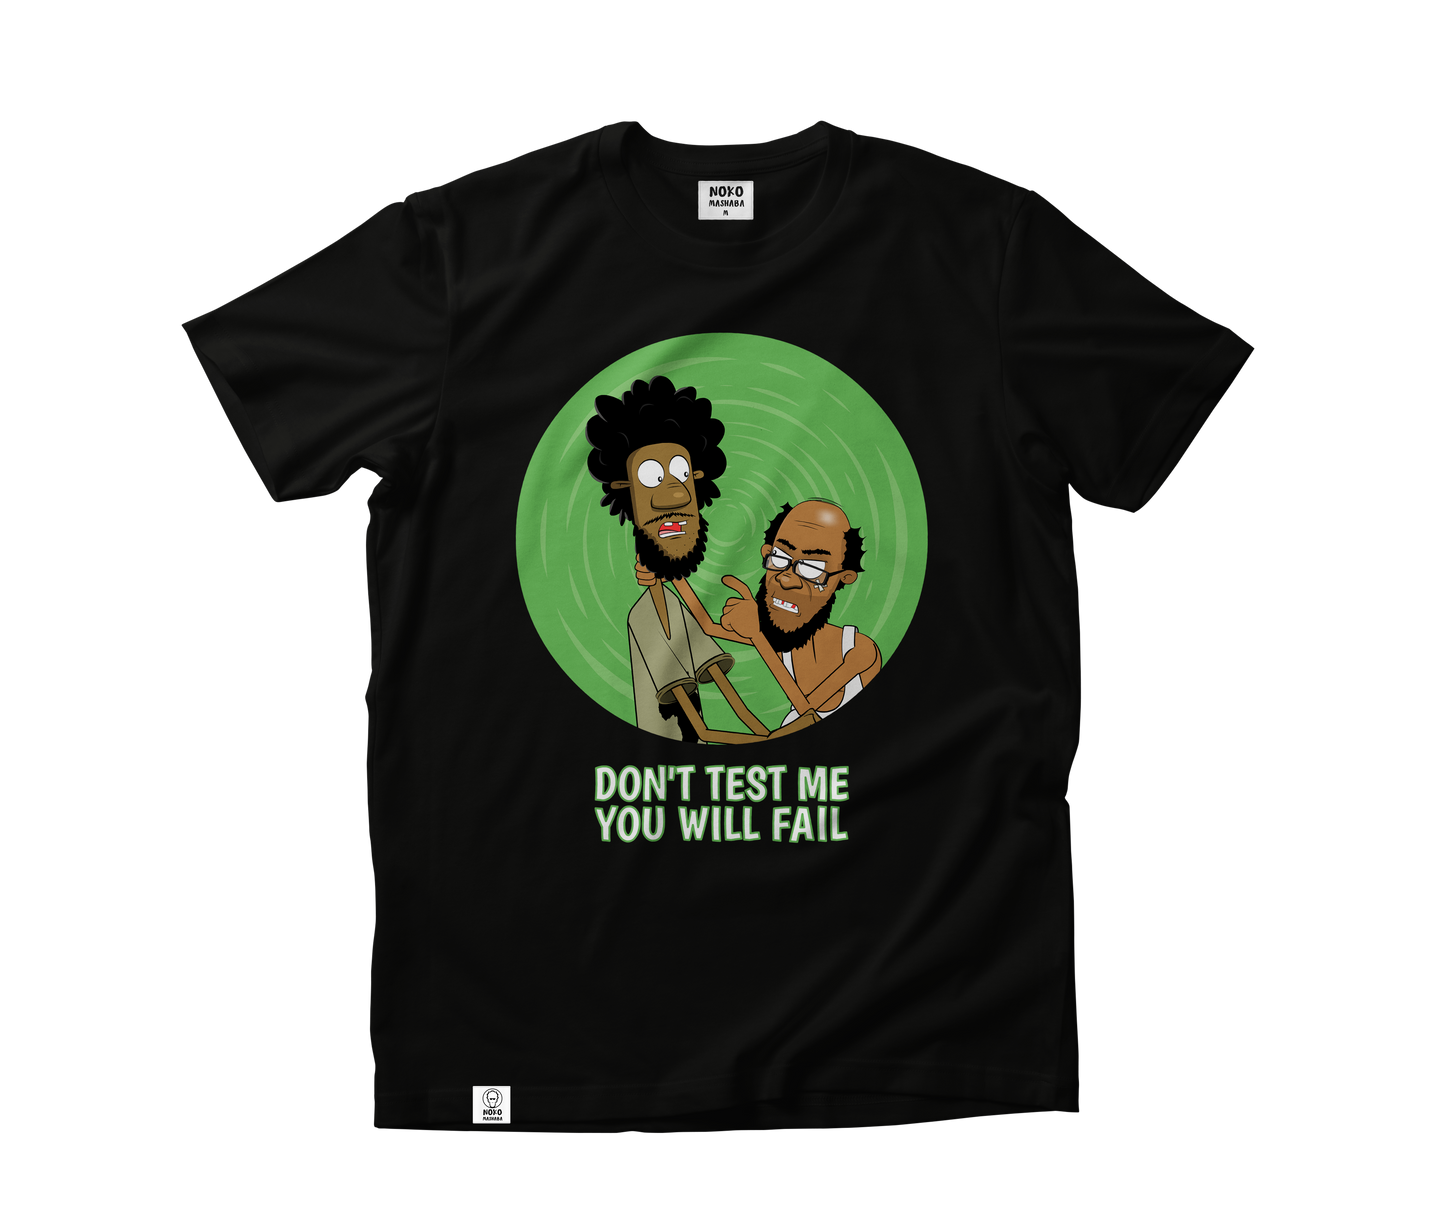 Don't Test Me T-Shirt